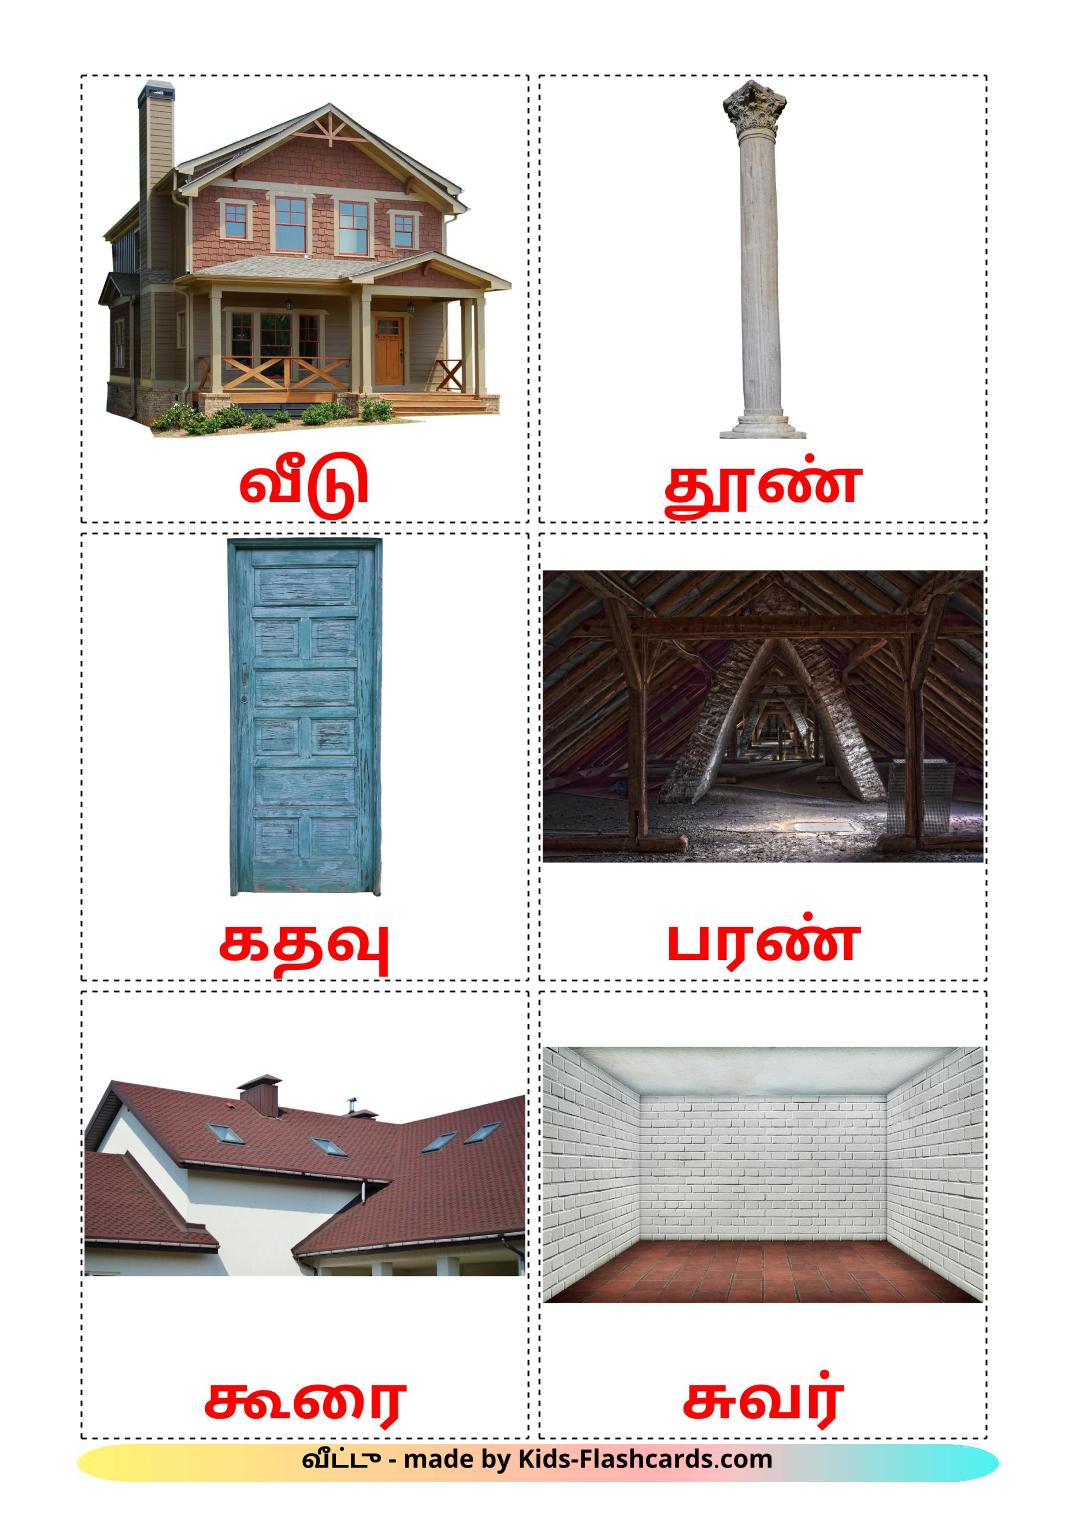 Casa - 25 flashcards tamil stampabili gratuitamente